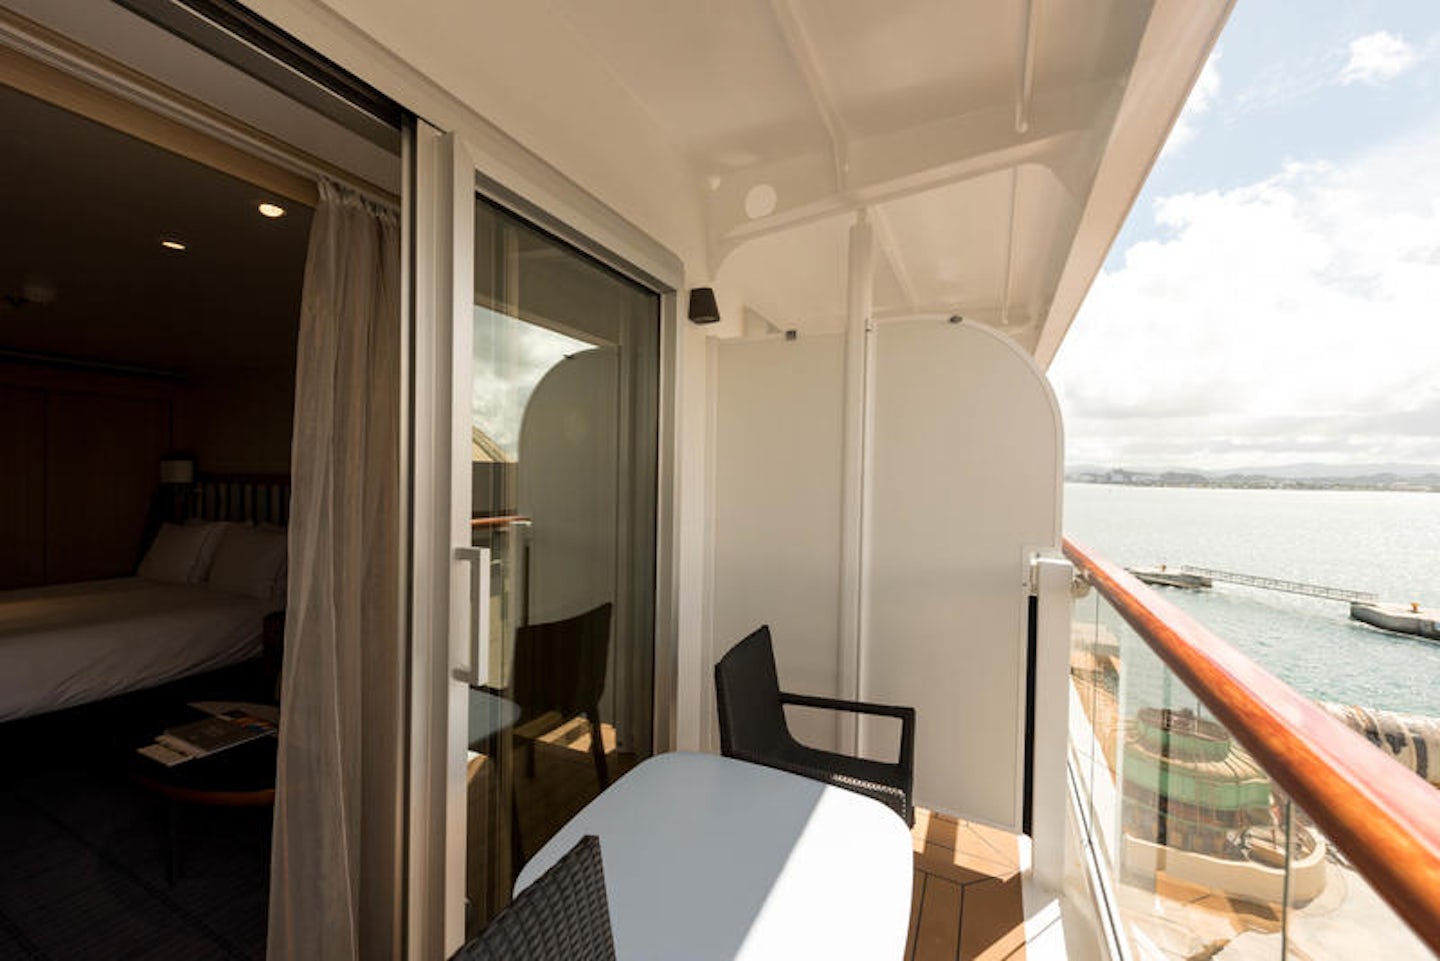 The Deluxe Veranda Cabin on Viking Sea